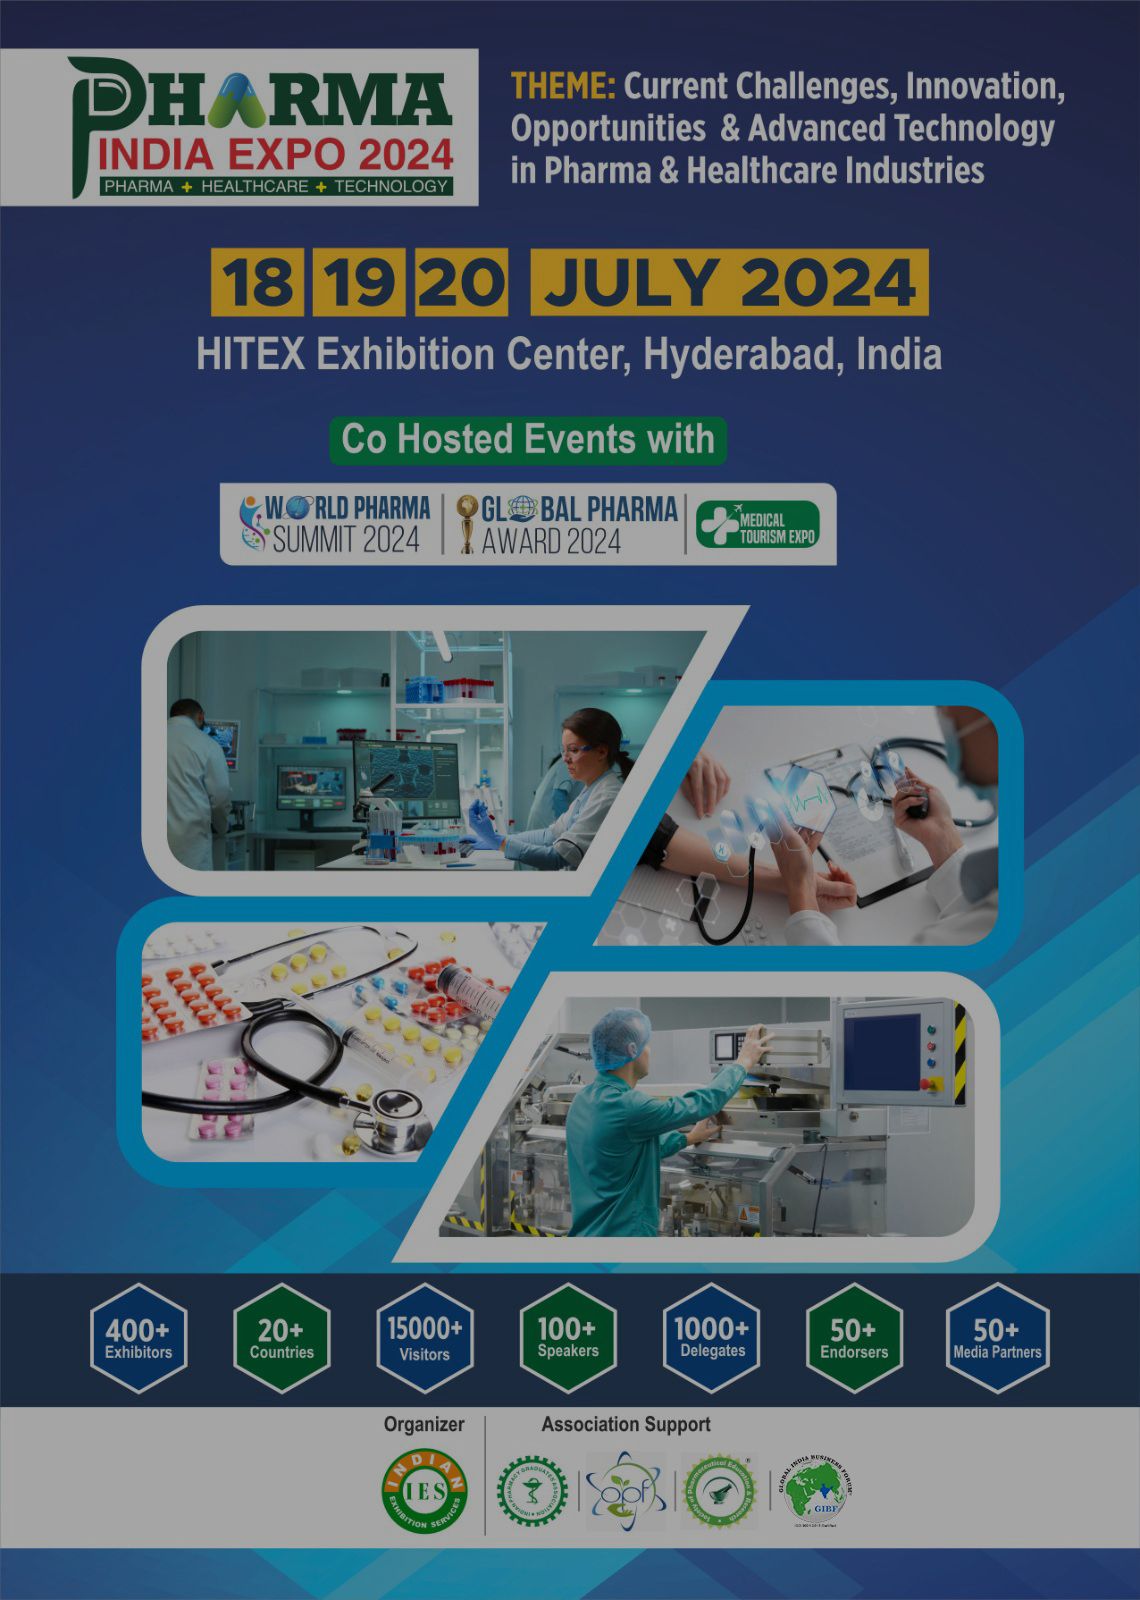 GIBF Collabrative Upcoming Event -  Pharma India Expo 2024